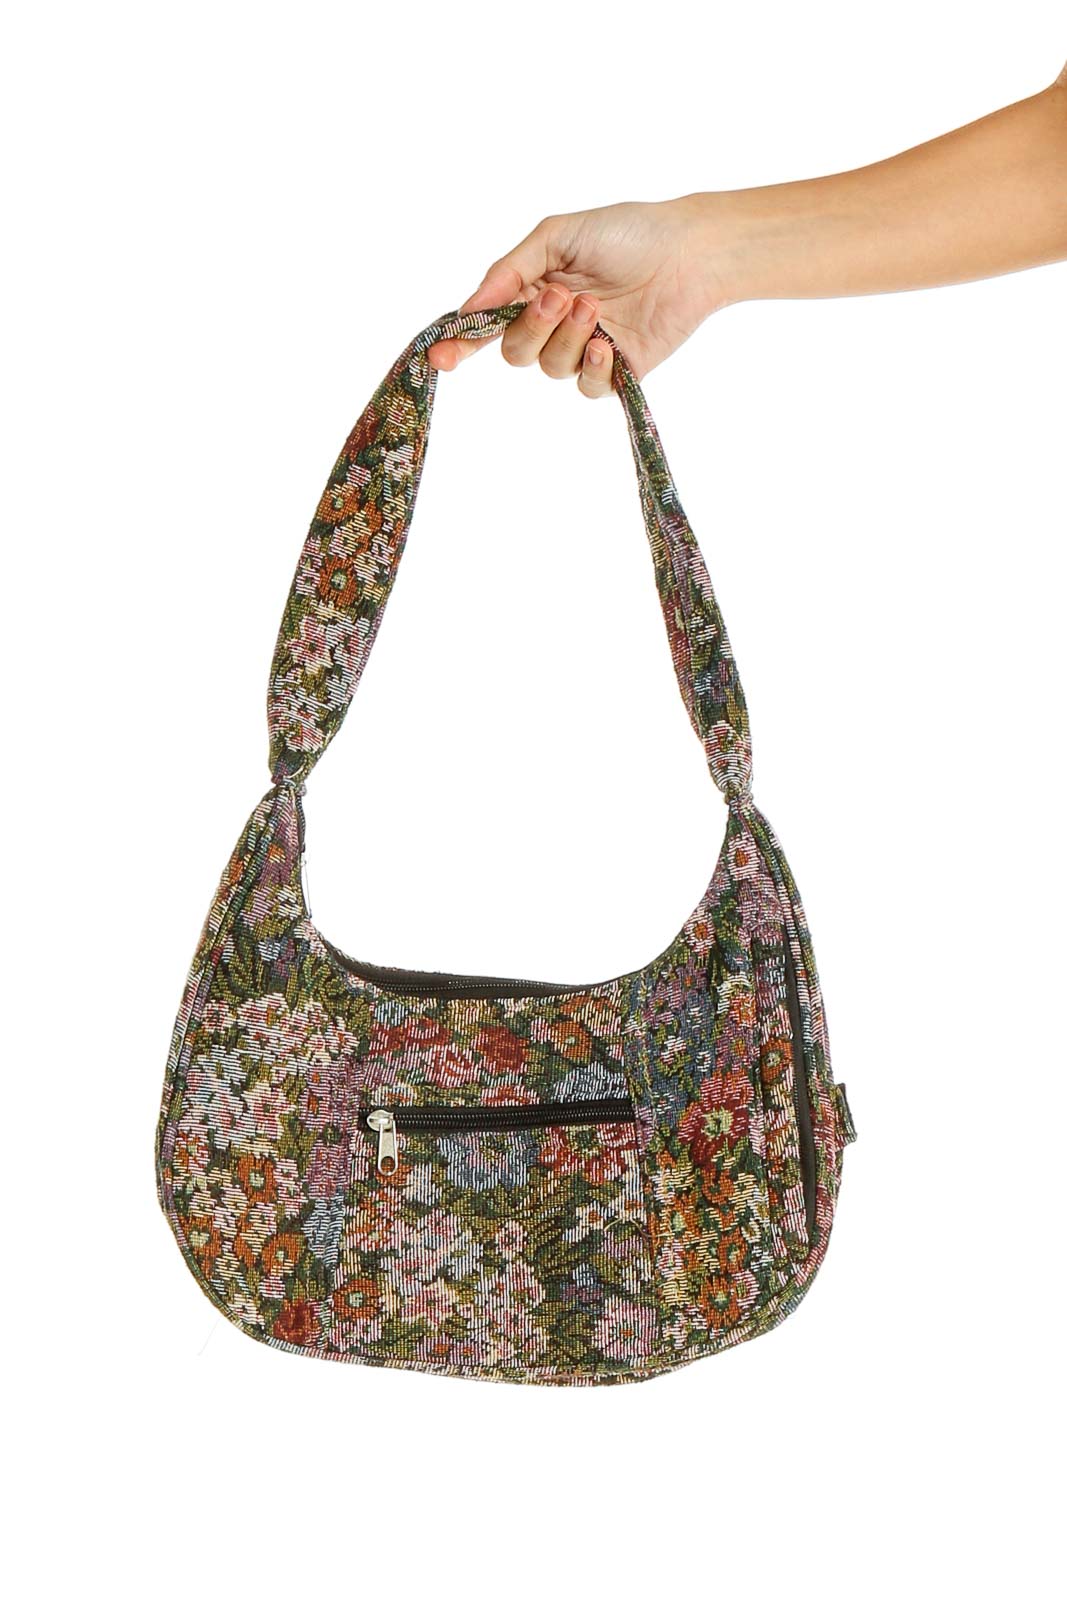 Multicolor Retro Floral Print Bag Front